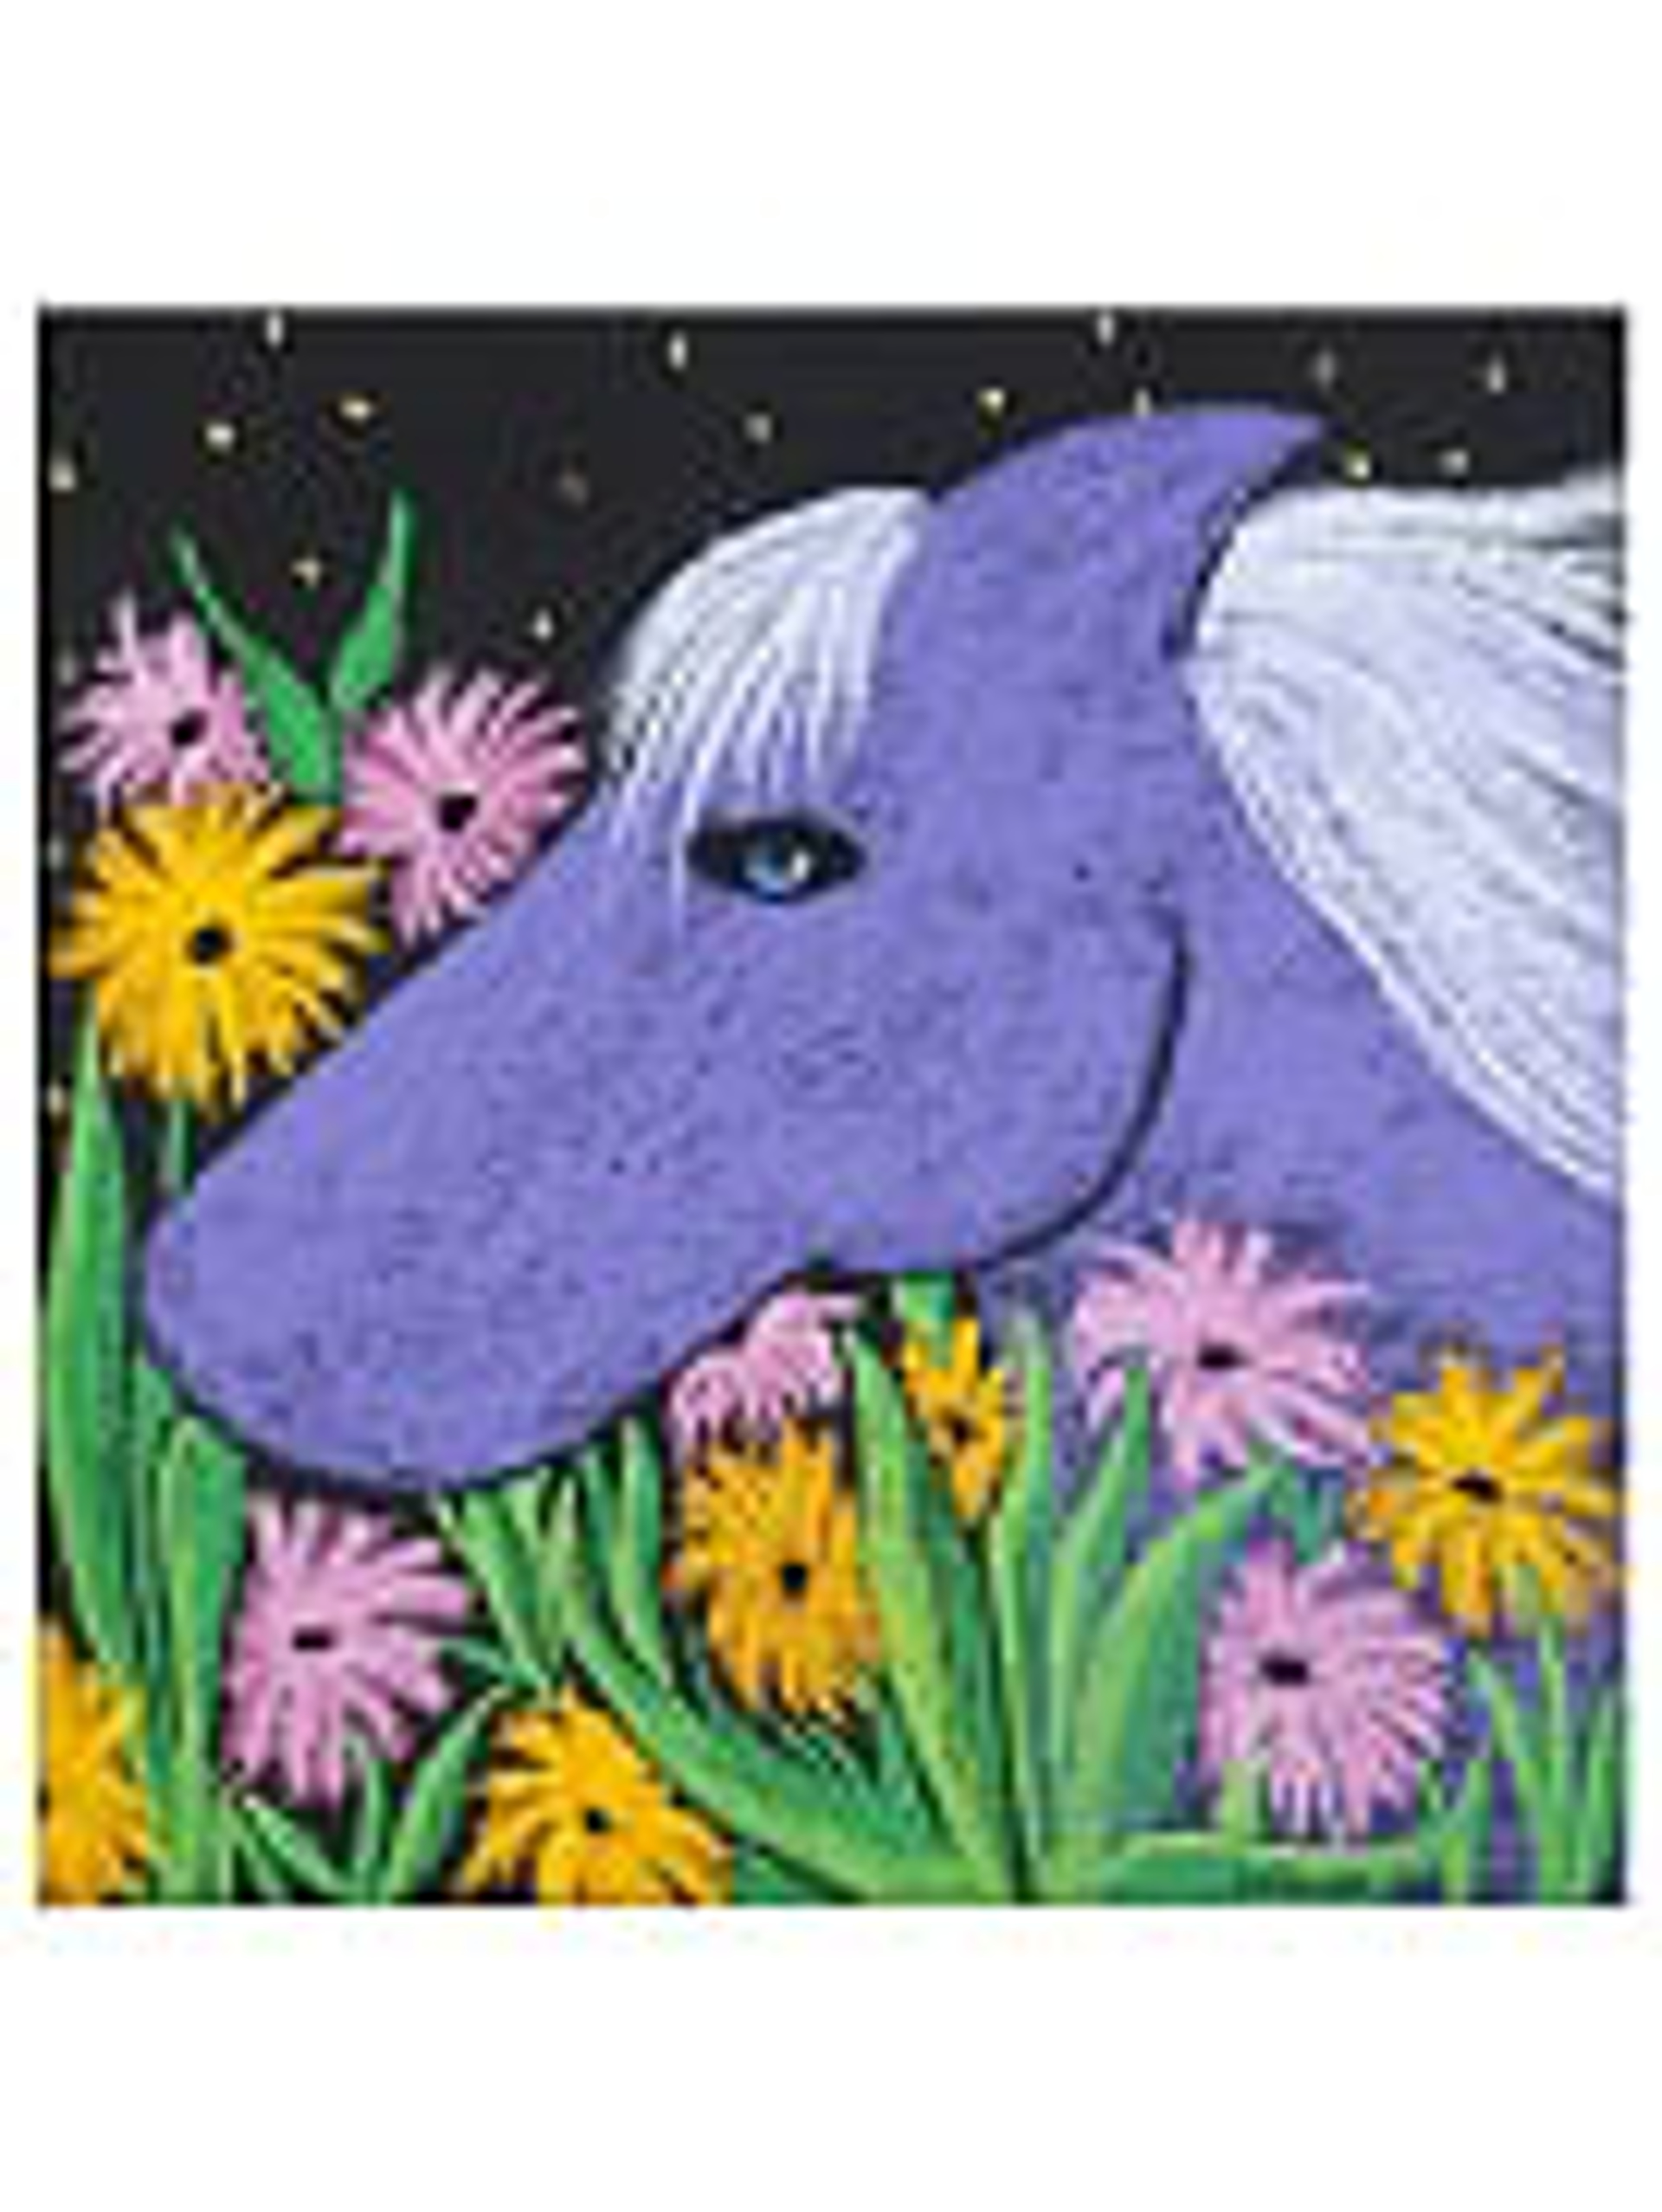 From: The Night Garden 'Purple Pony' by Carole LaRoche